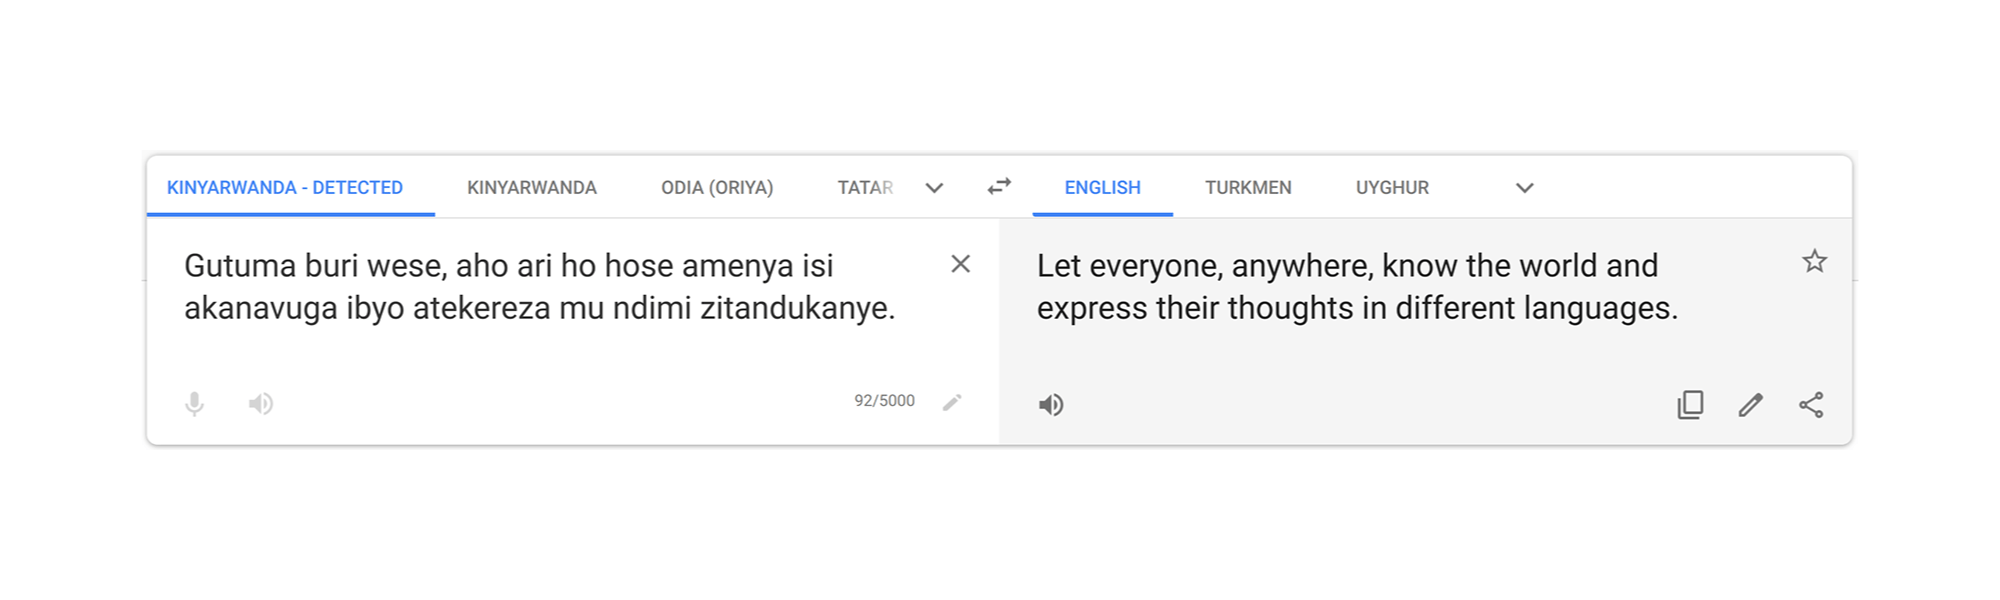 google translate new languages Kinyarwanda Odia Oriya Tatar Turkmen Uyghur